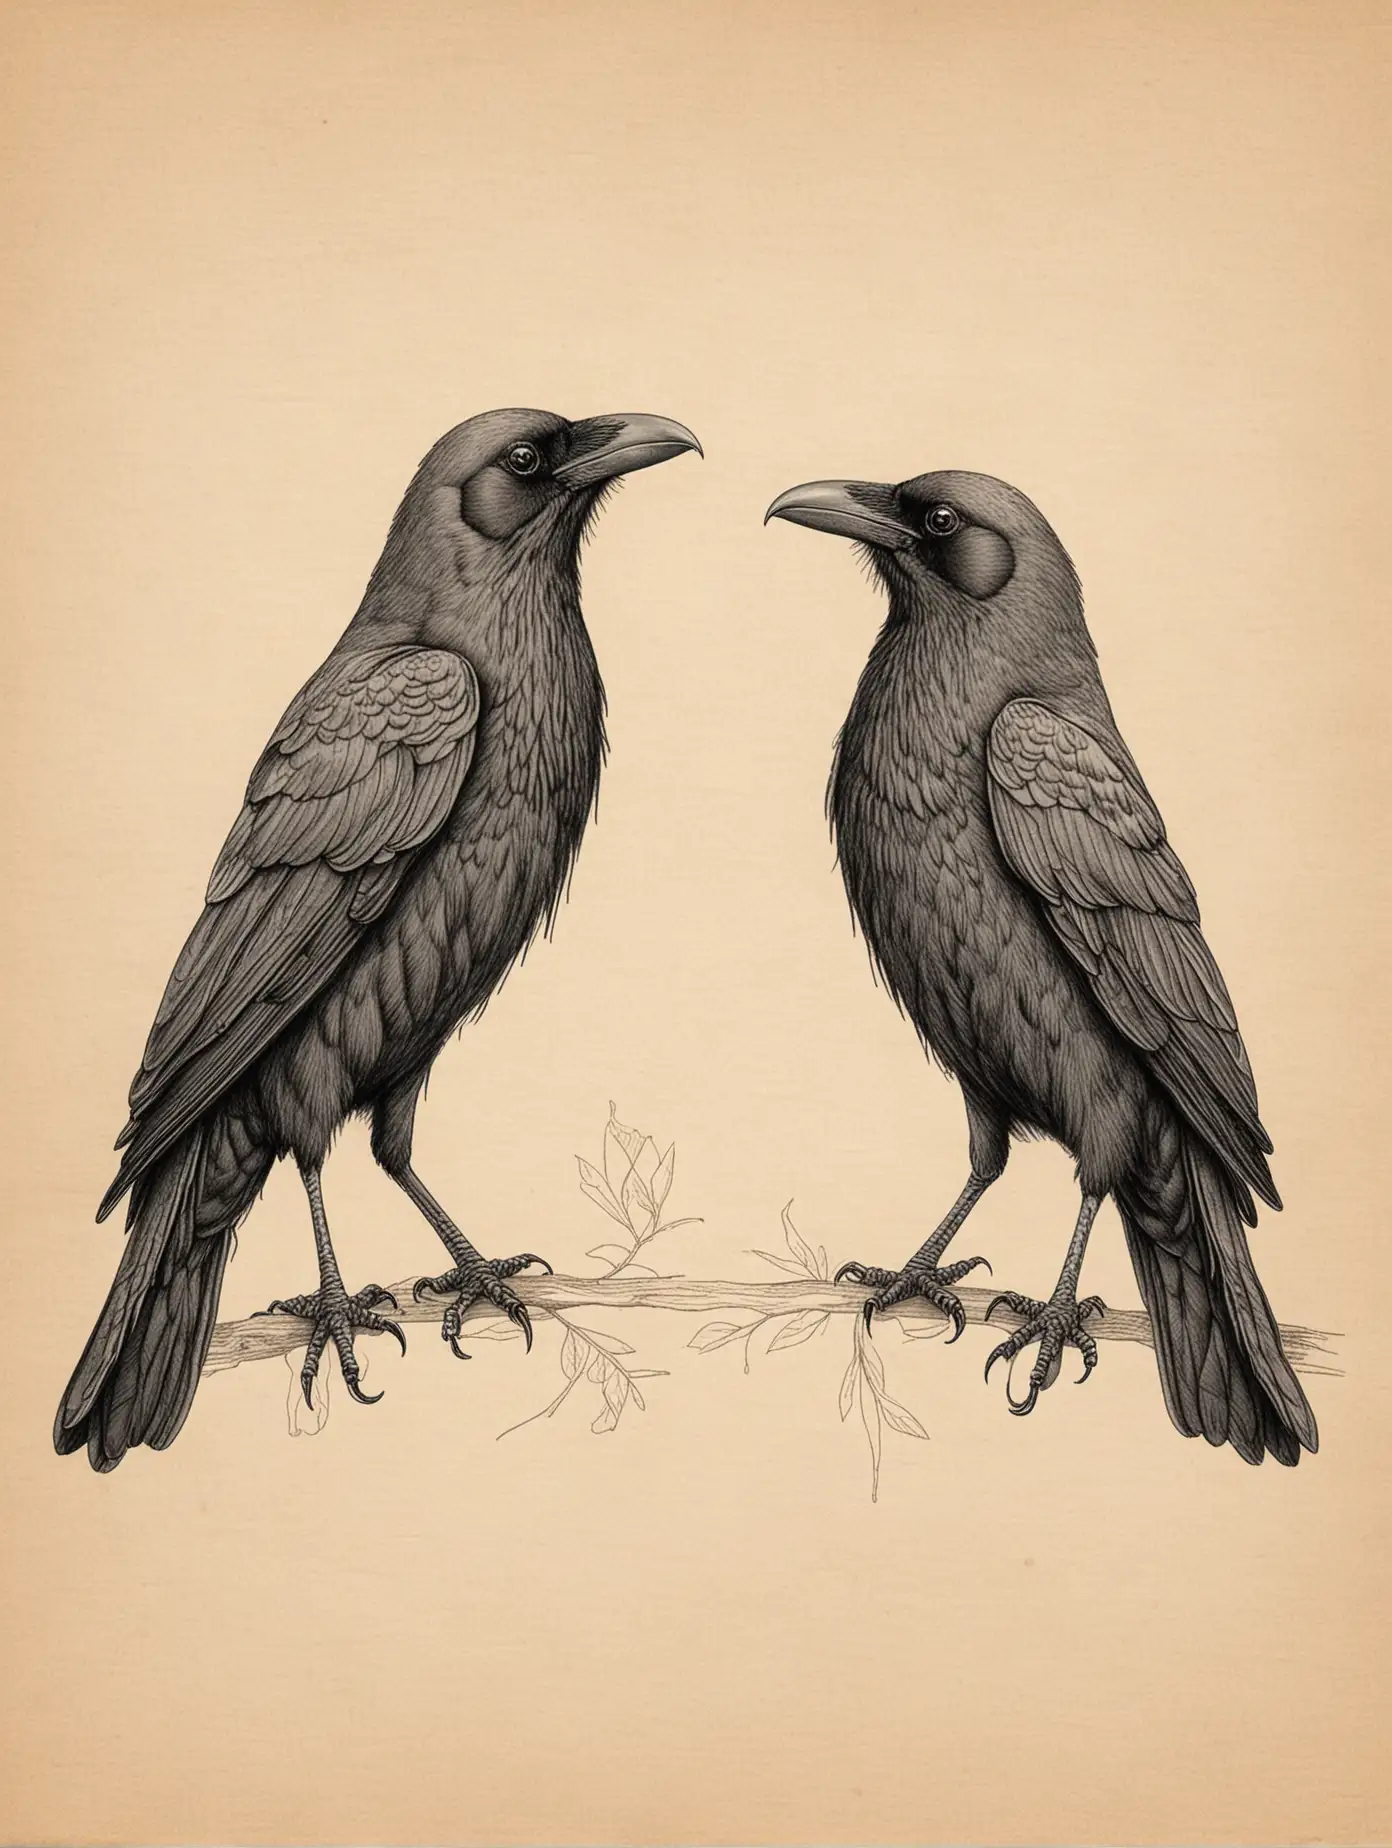 Friendly Black Crows Sketch Whimsical Avian Artwork